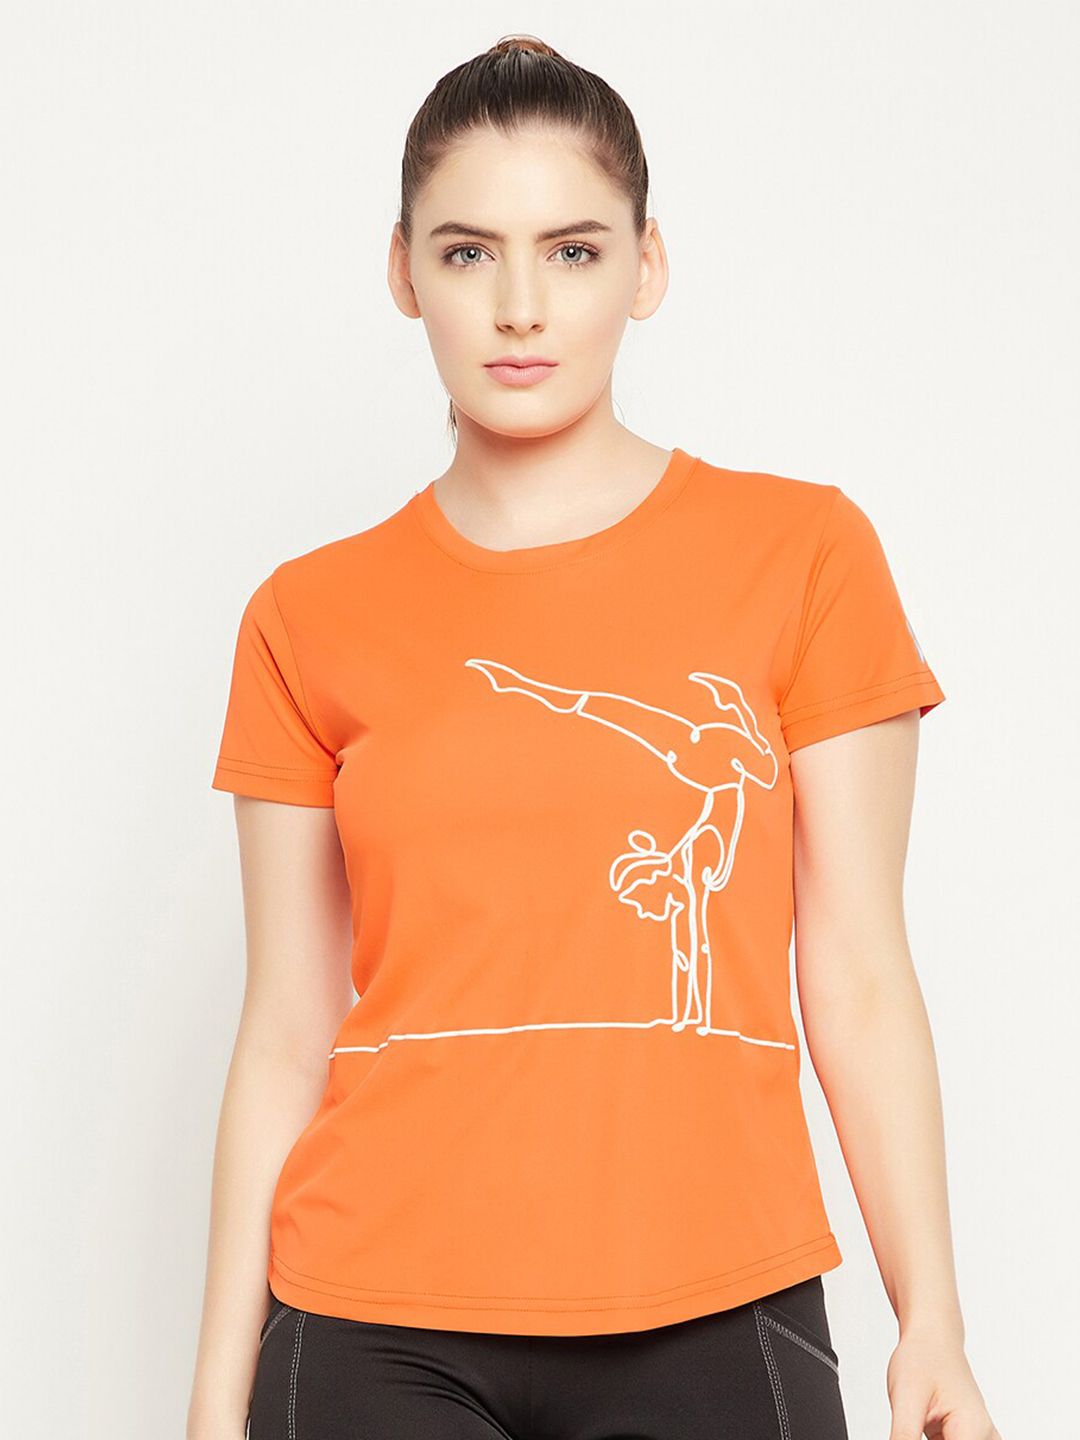 Clovia Women Orange Sports Slim Fit T-shirt Price in India